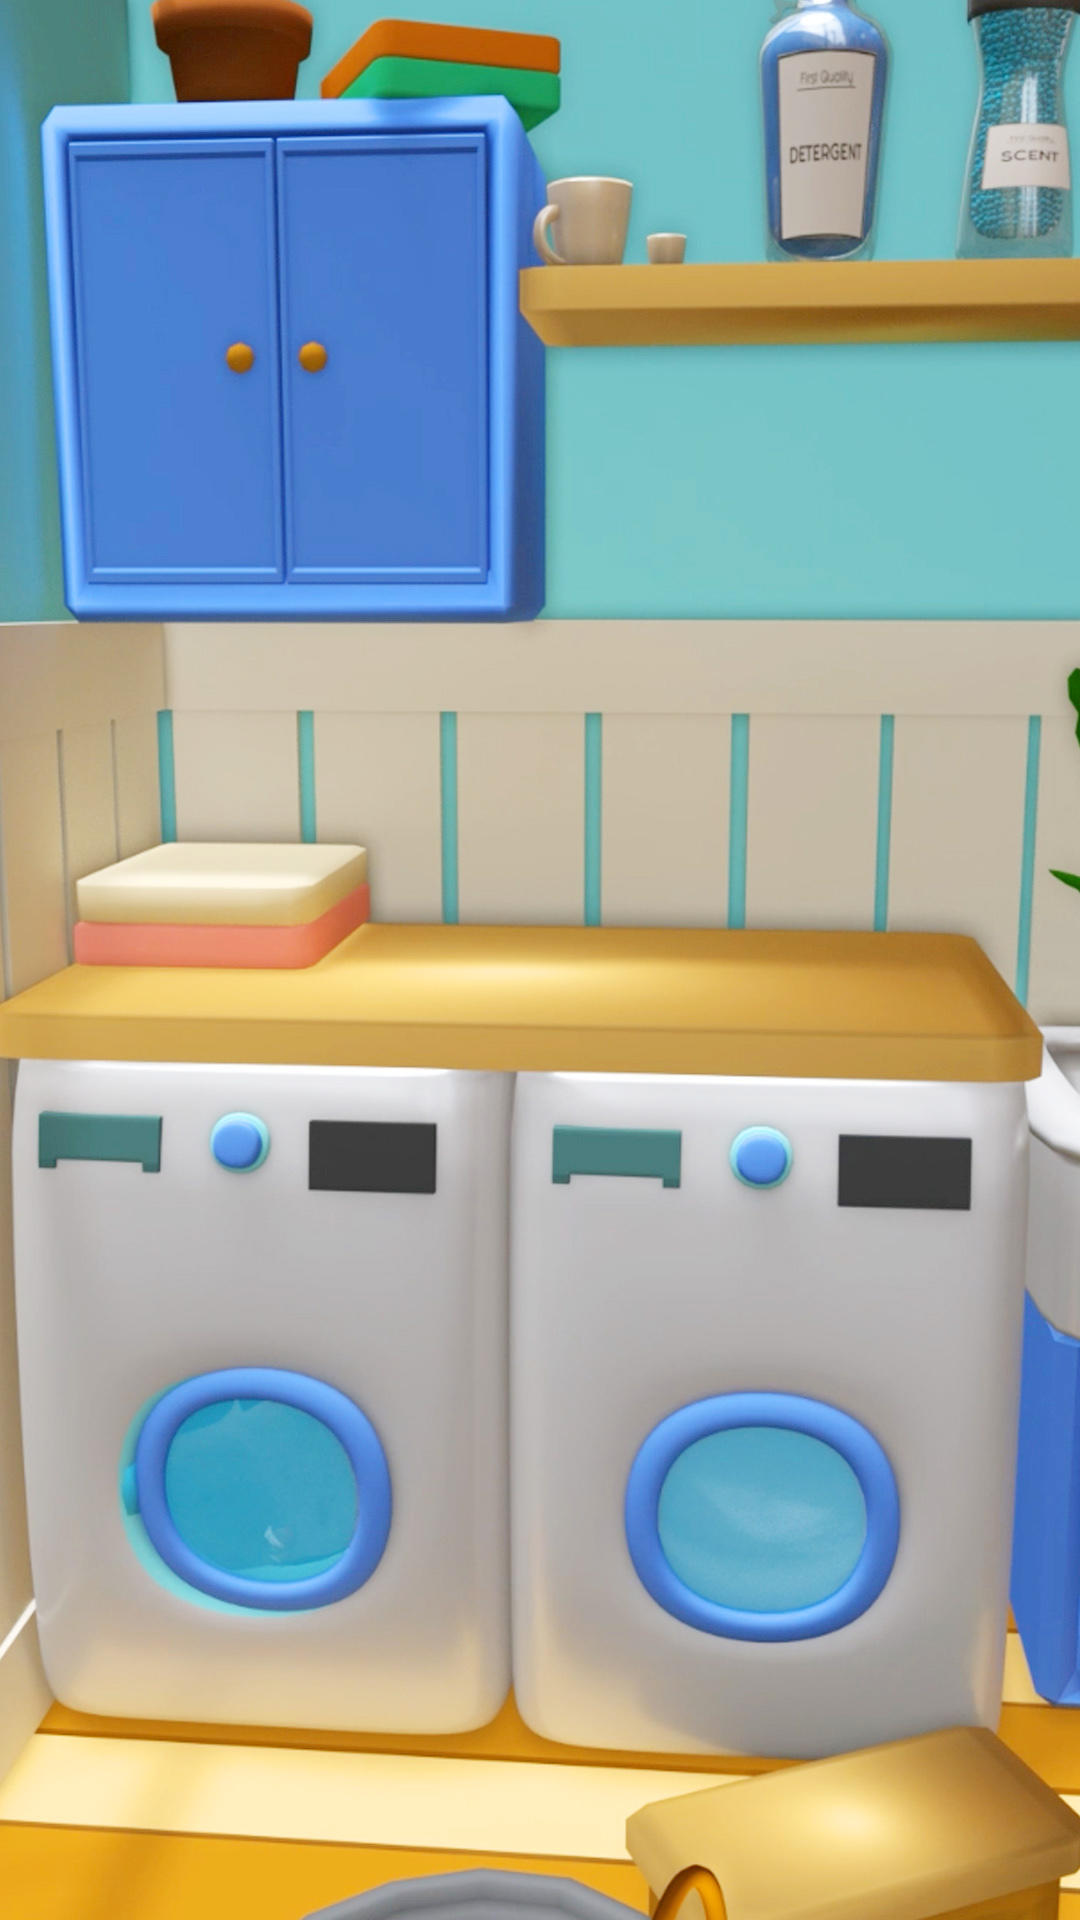 Screenshot of Laundry Restock